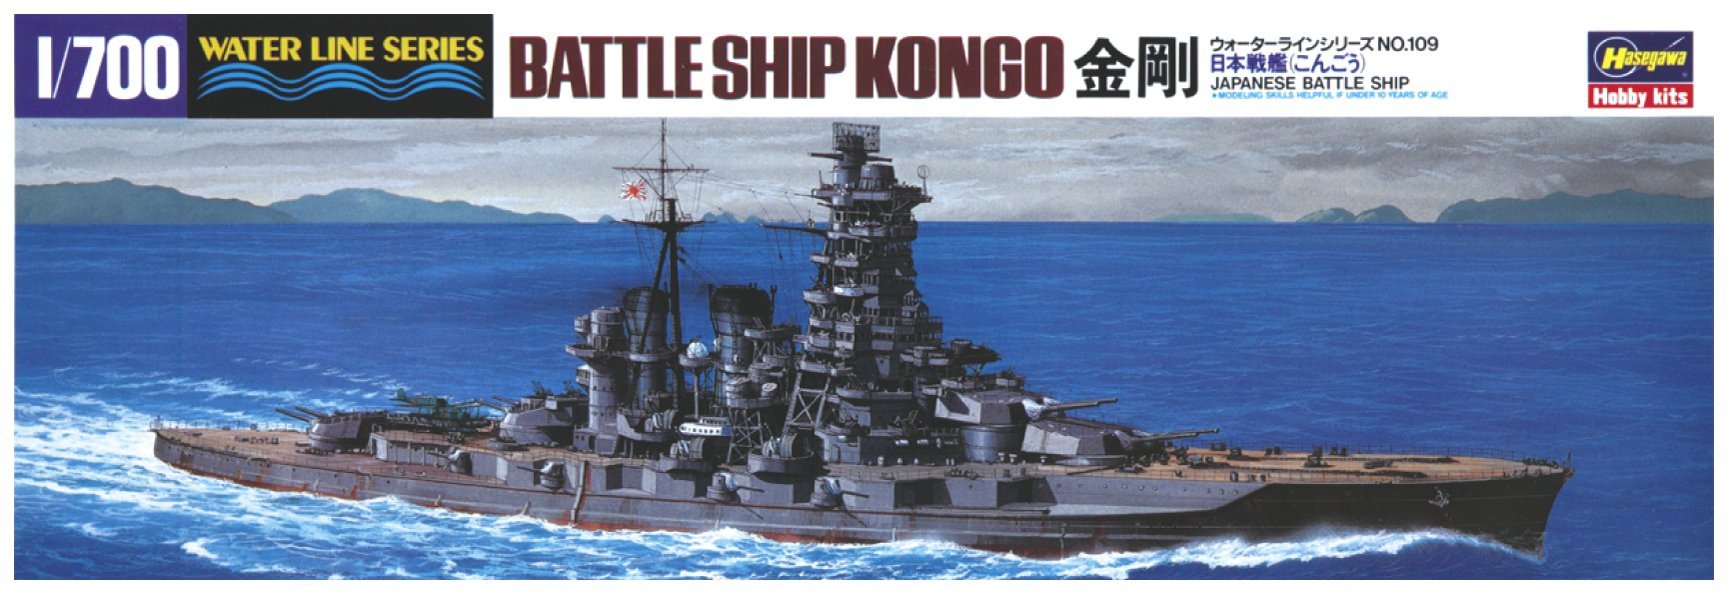 Hasegawa 1/700 Water Line Series Japanese Navy Battleship Kongo Plastic Model 109